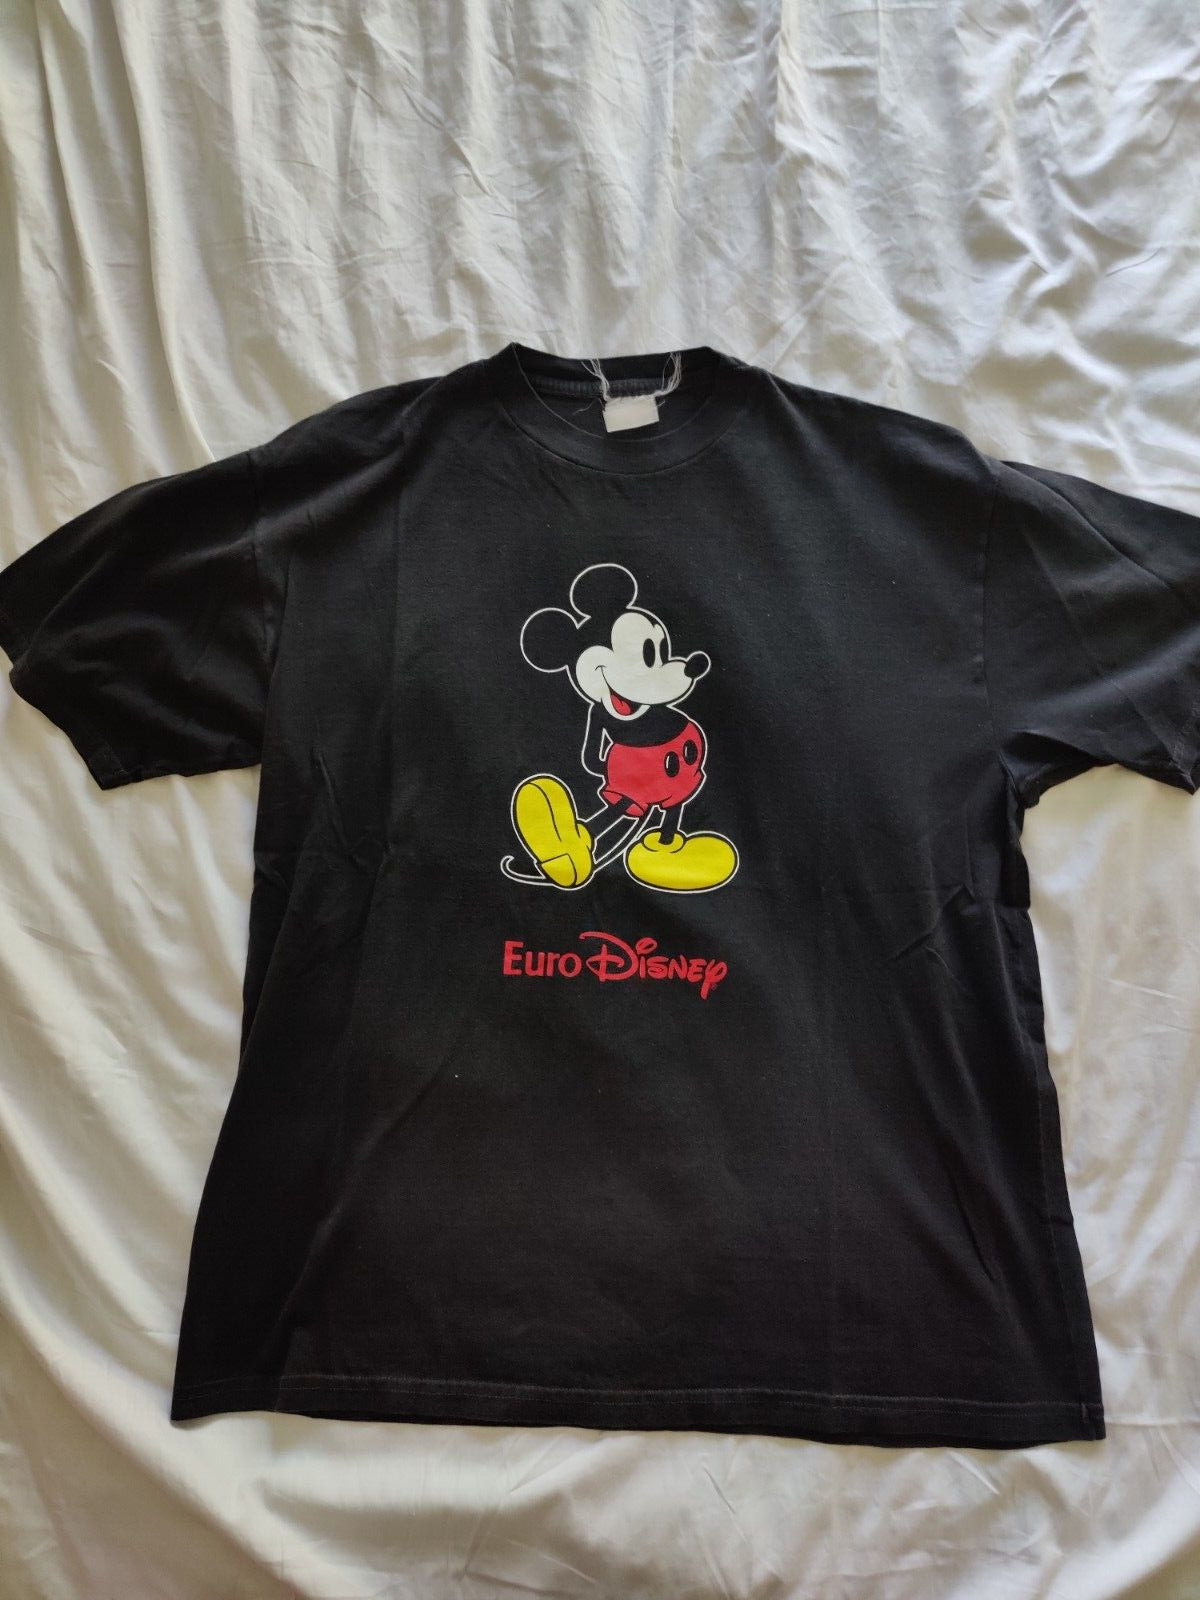 Vintage EuroDisney Disney Shirt See Description